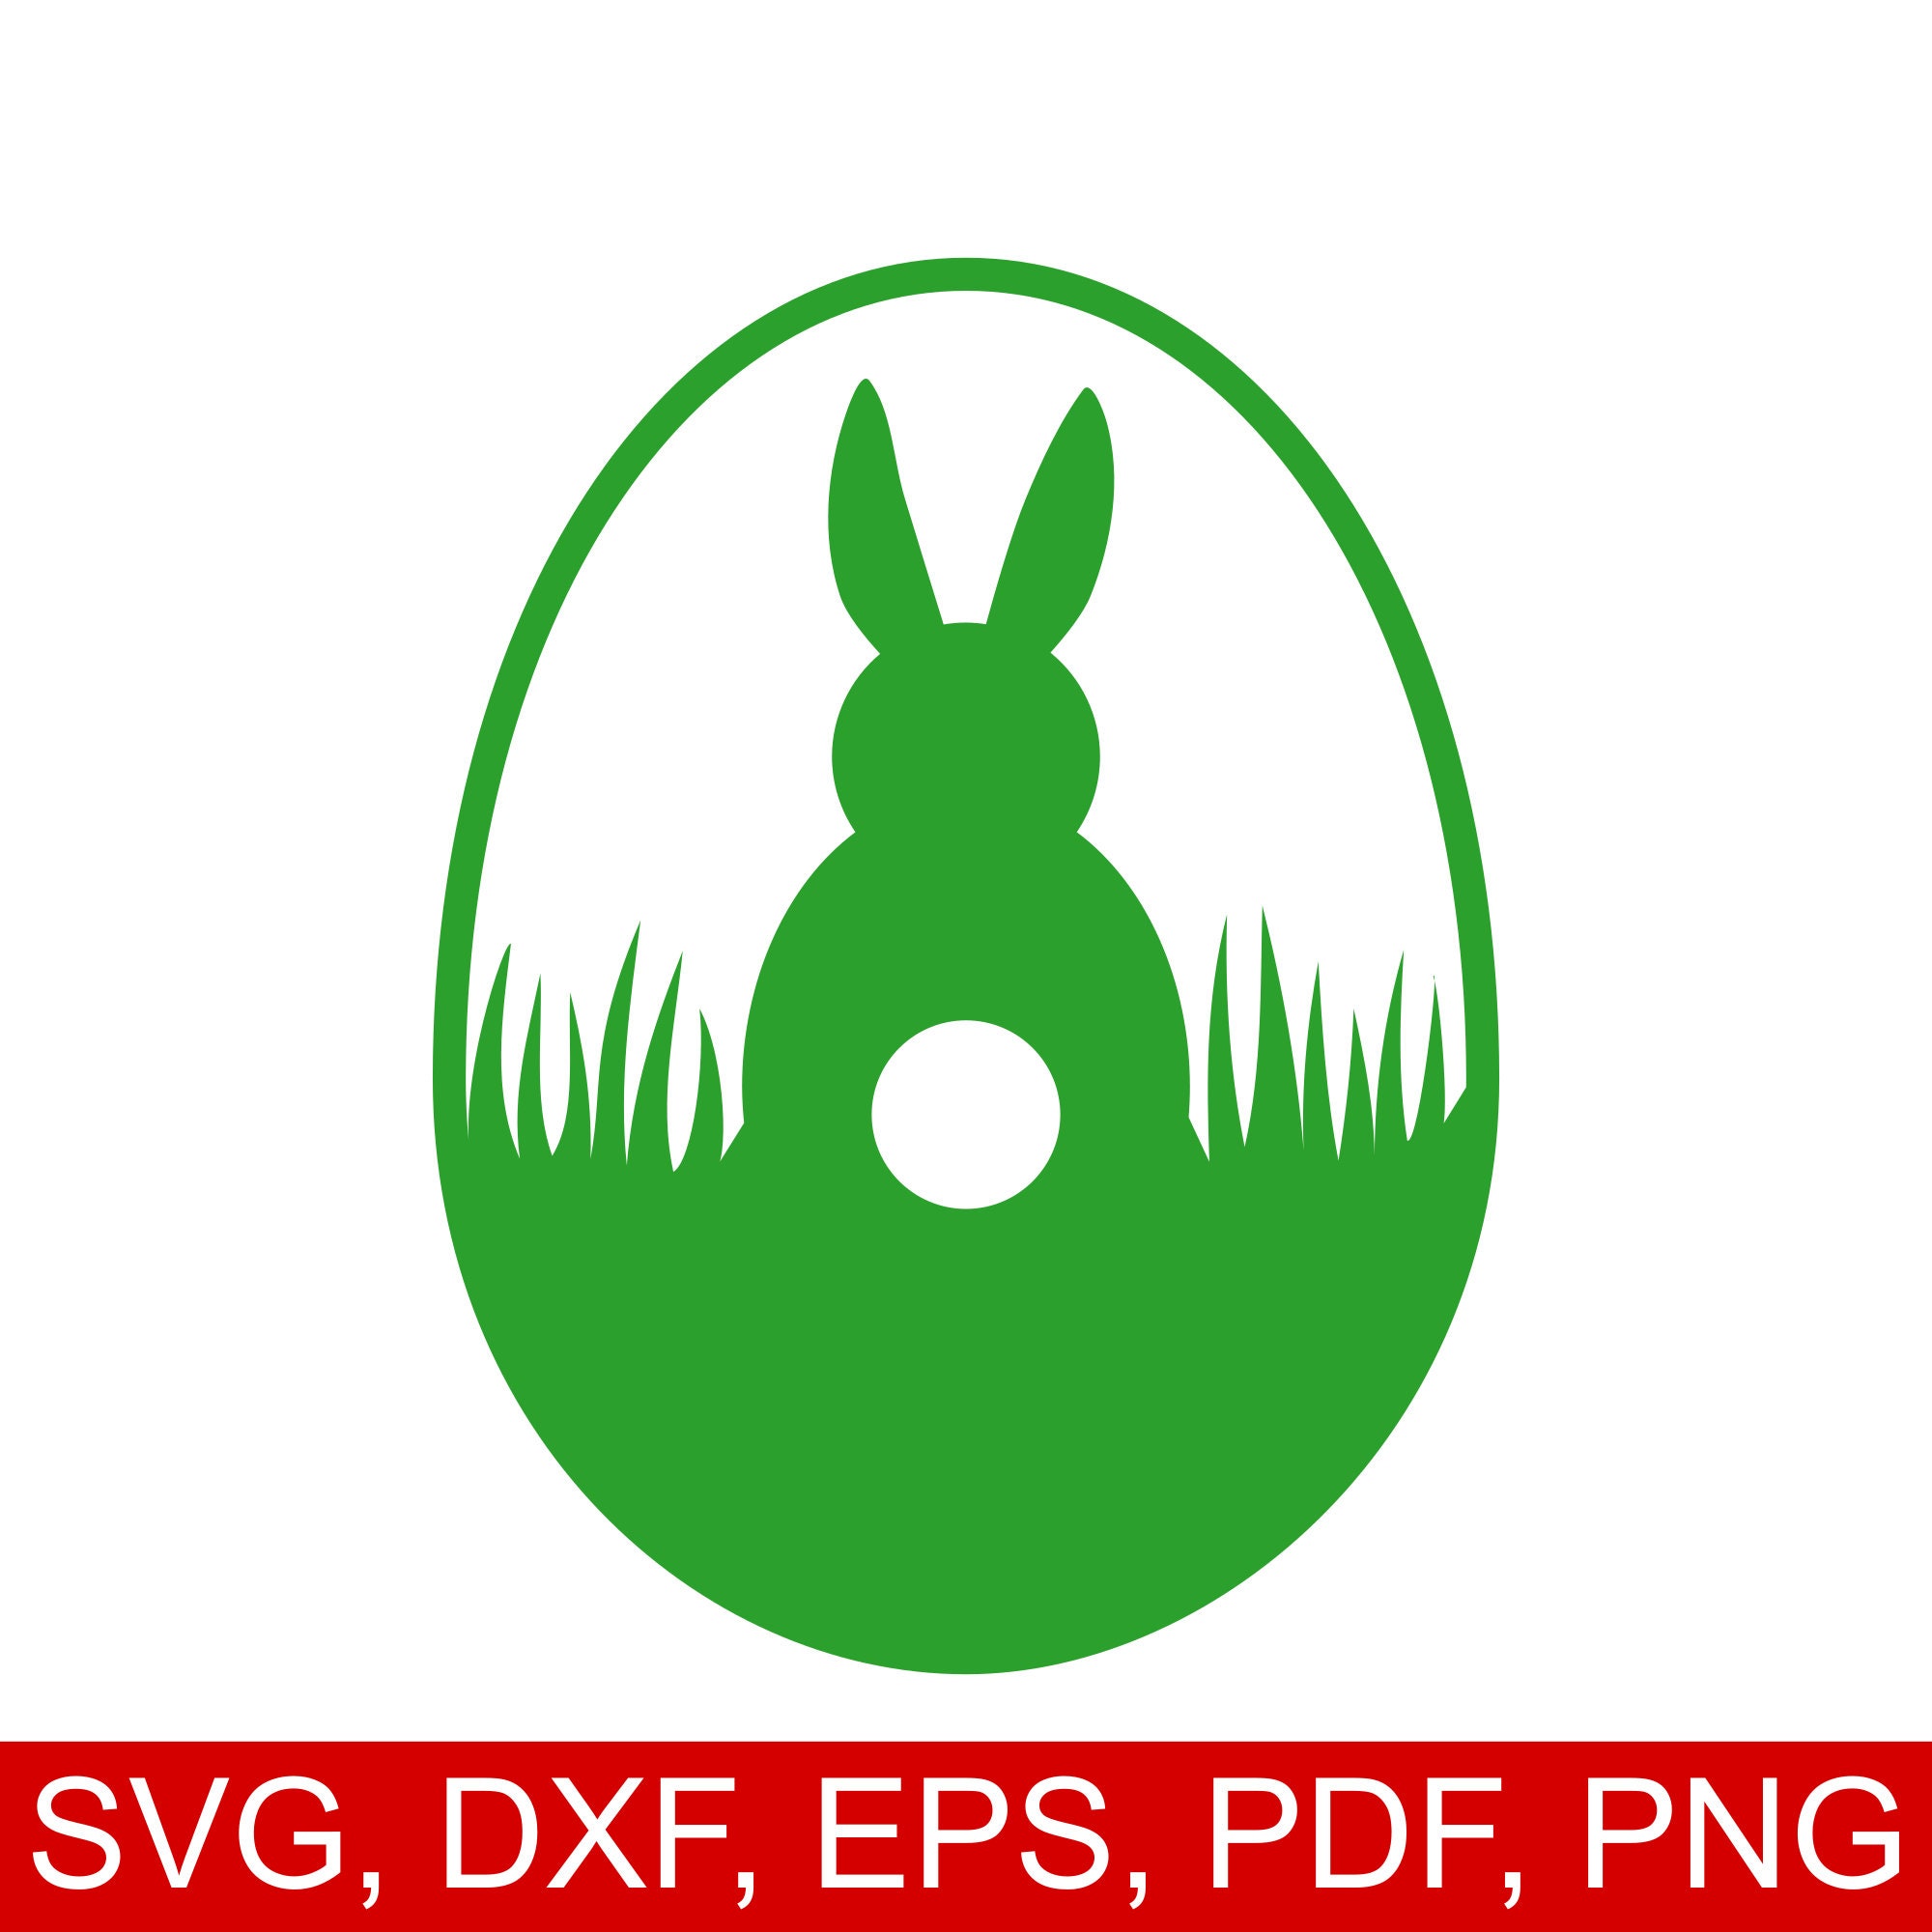 Easter Eggs SVG Bundle, 12 Easter Eggs SVG files for Cricut